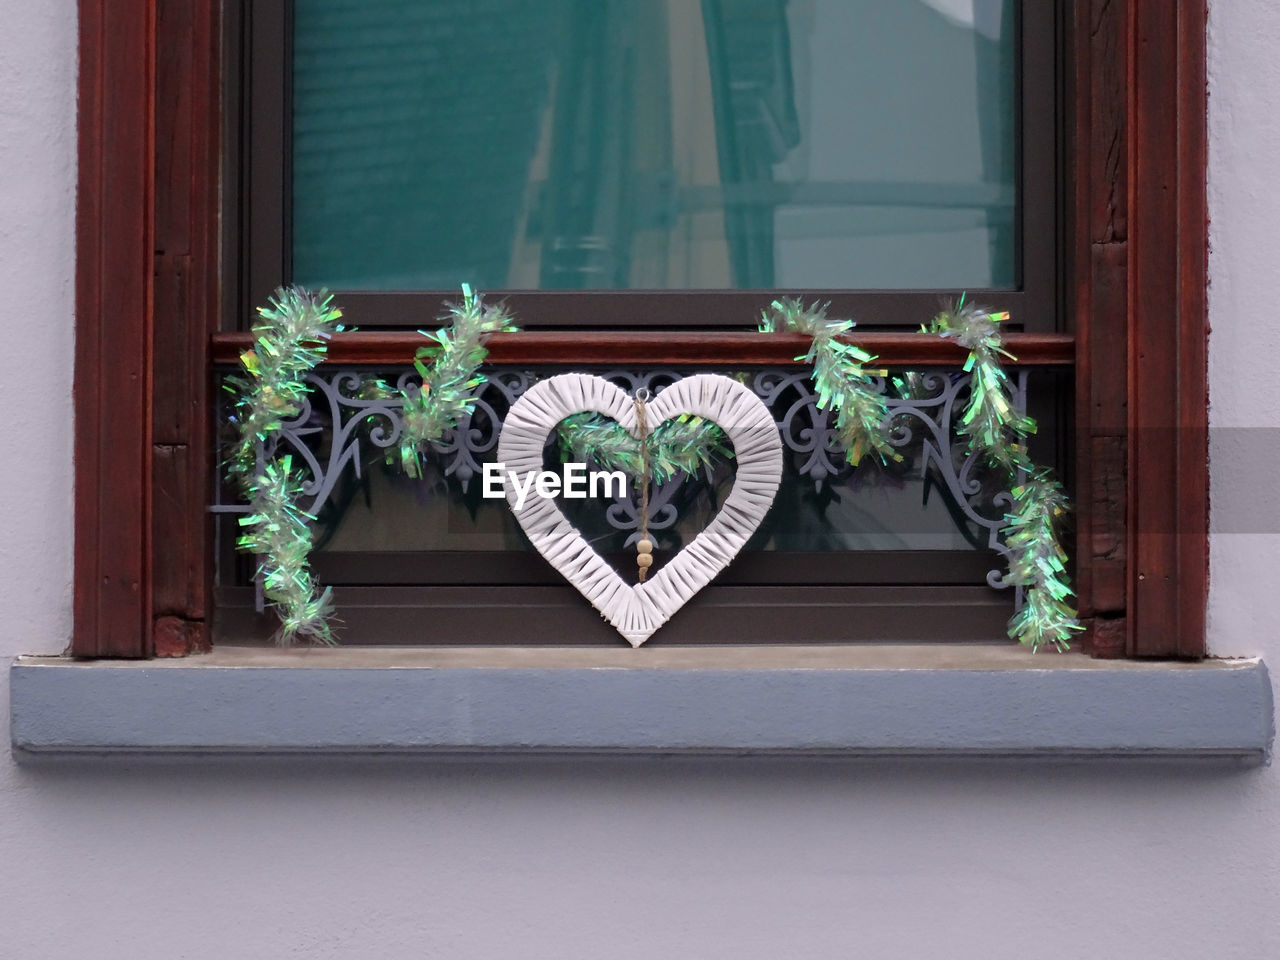 Heart shaped decoration on window